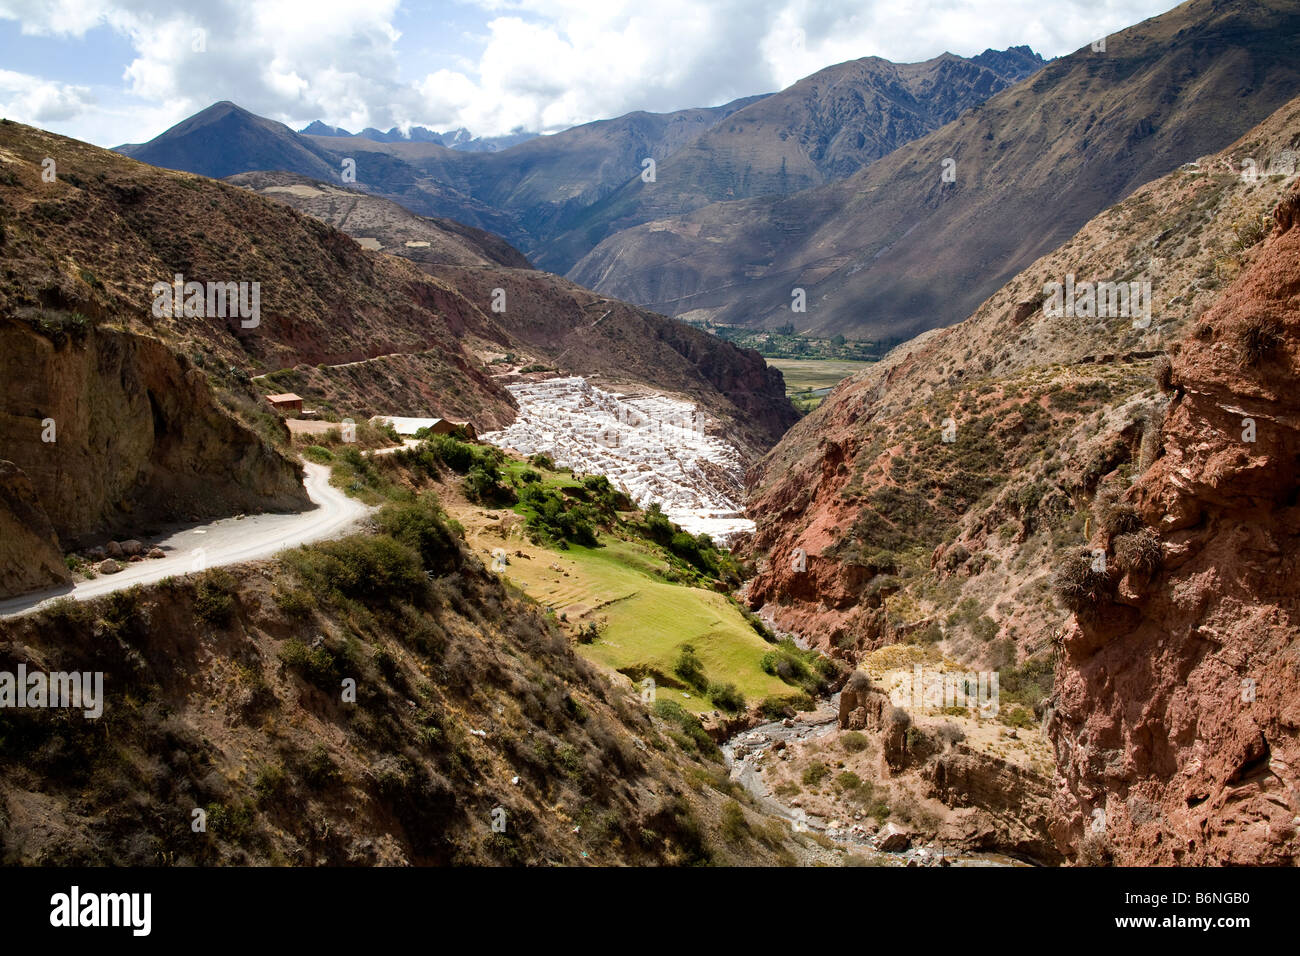 The salt pans of Maras, Peru. Stock Photo